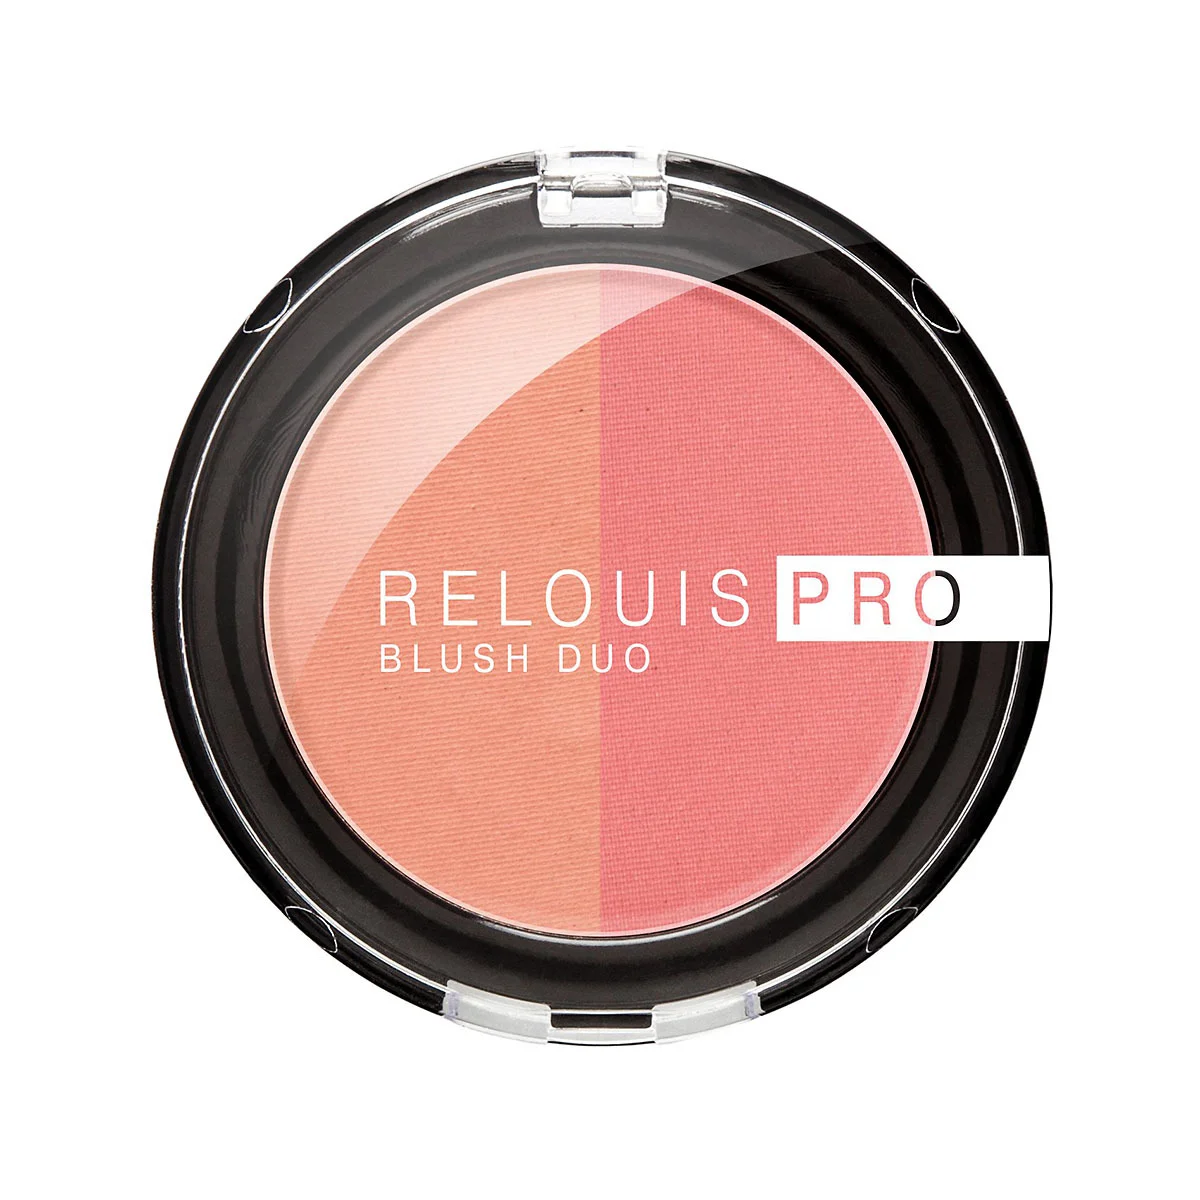 Relouis Pro Blush Duo